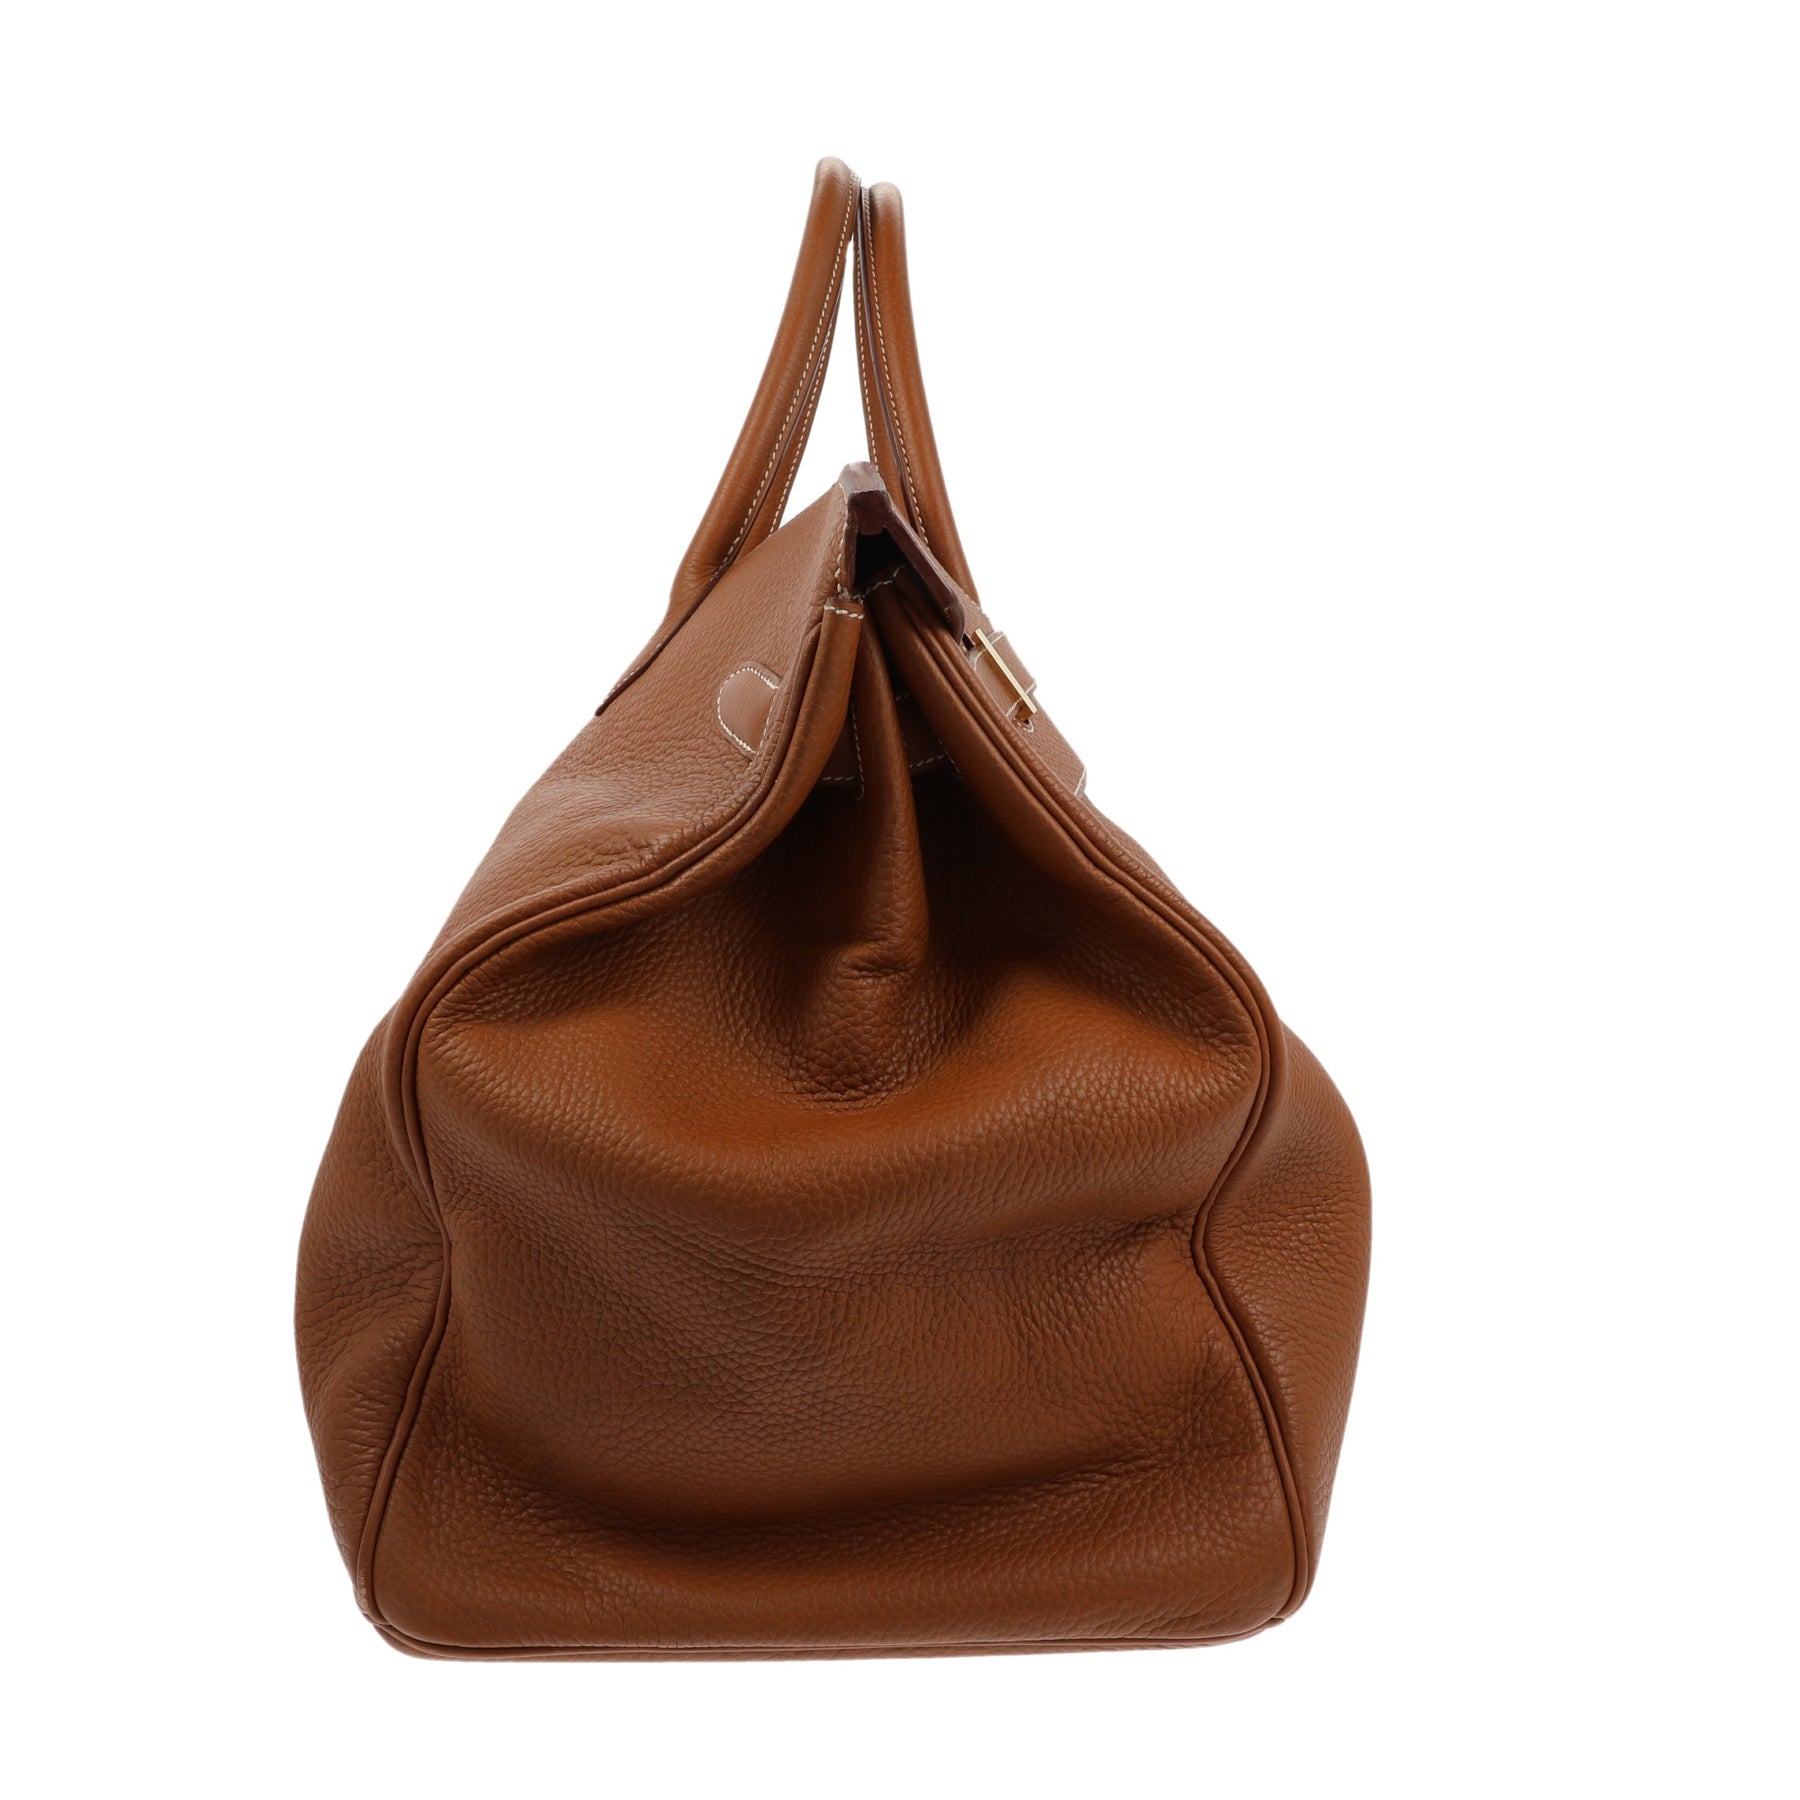 Hermes Birkin 50 CM Togo Leather  Beautiful handbags, Stylish handbags,  Bag obsession